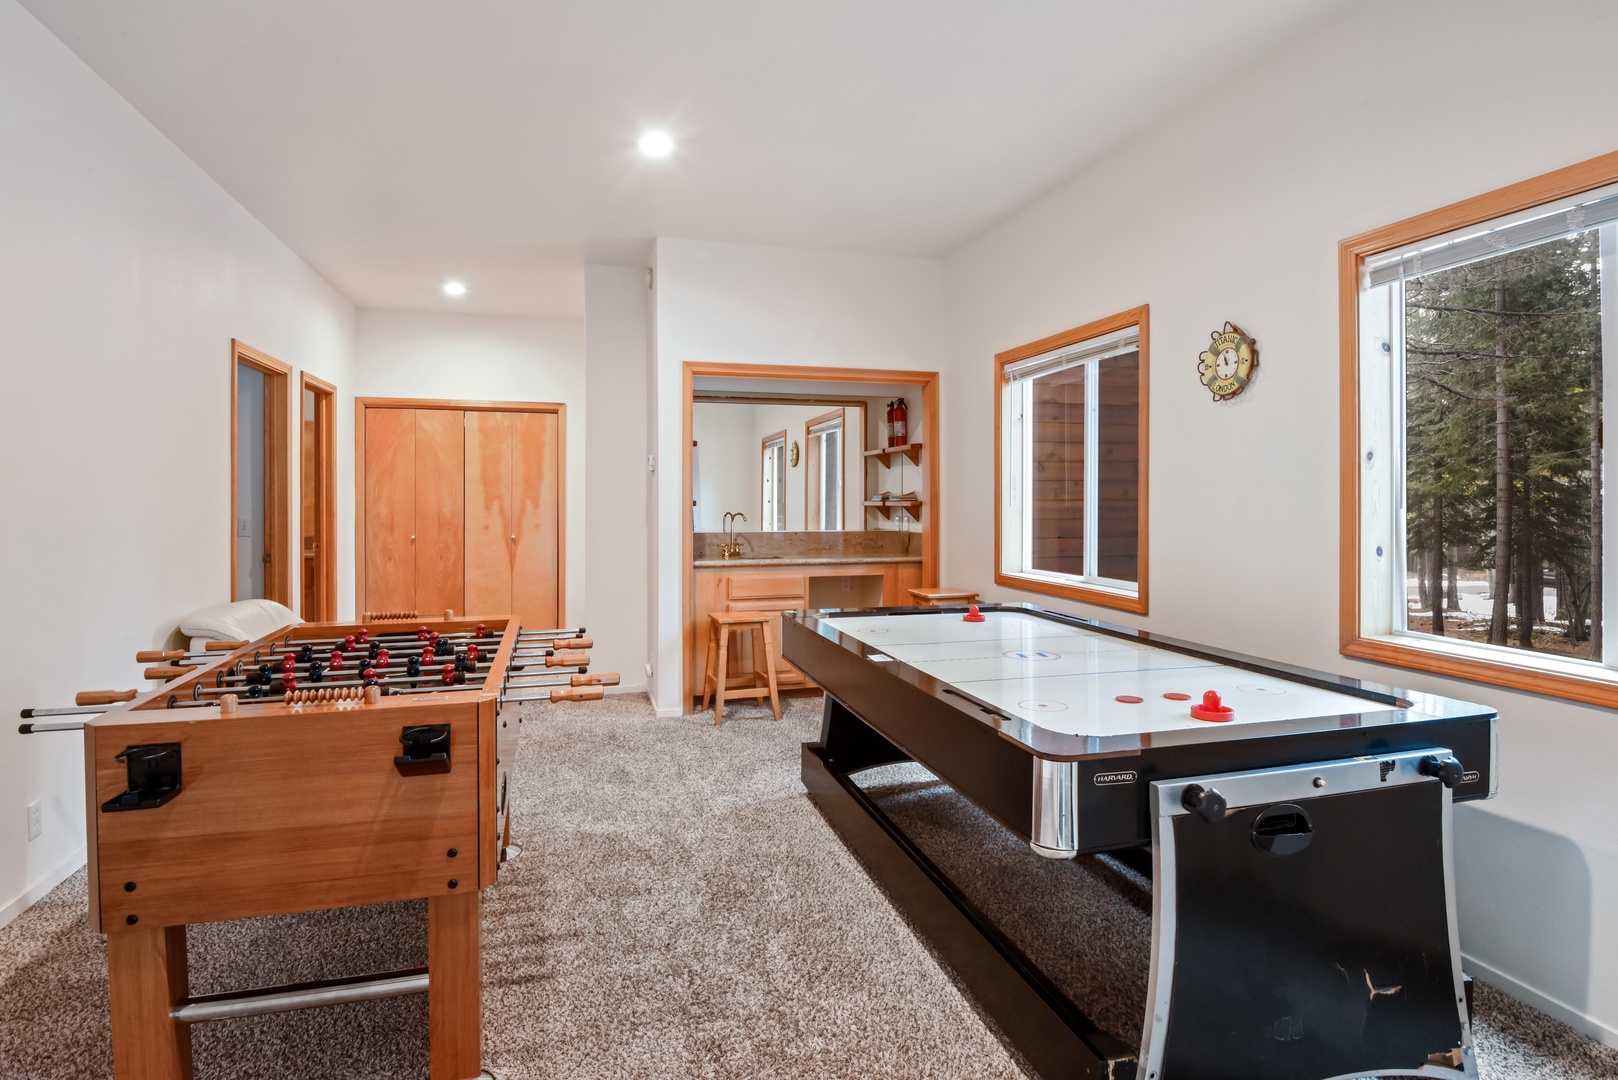 Game room with air hockey, fooseball table, and wet bar